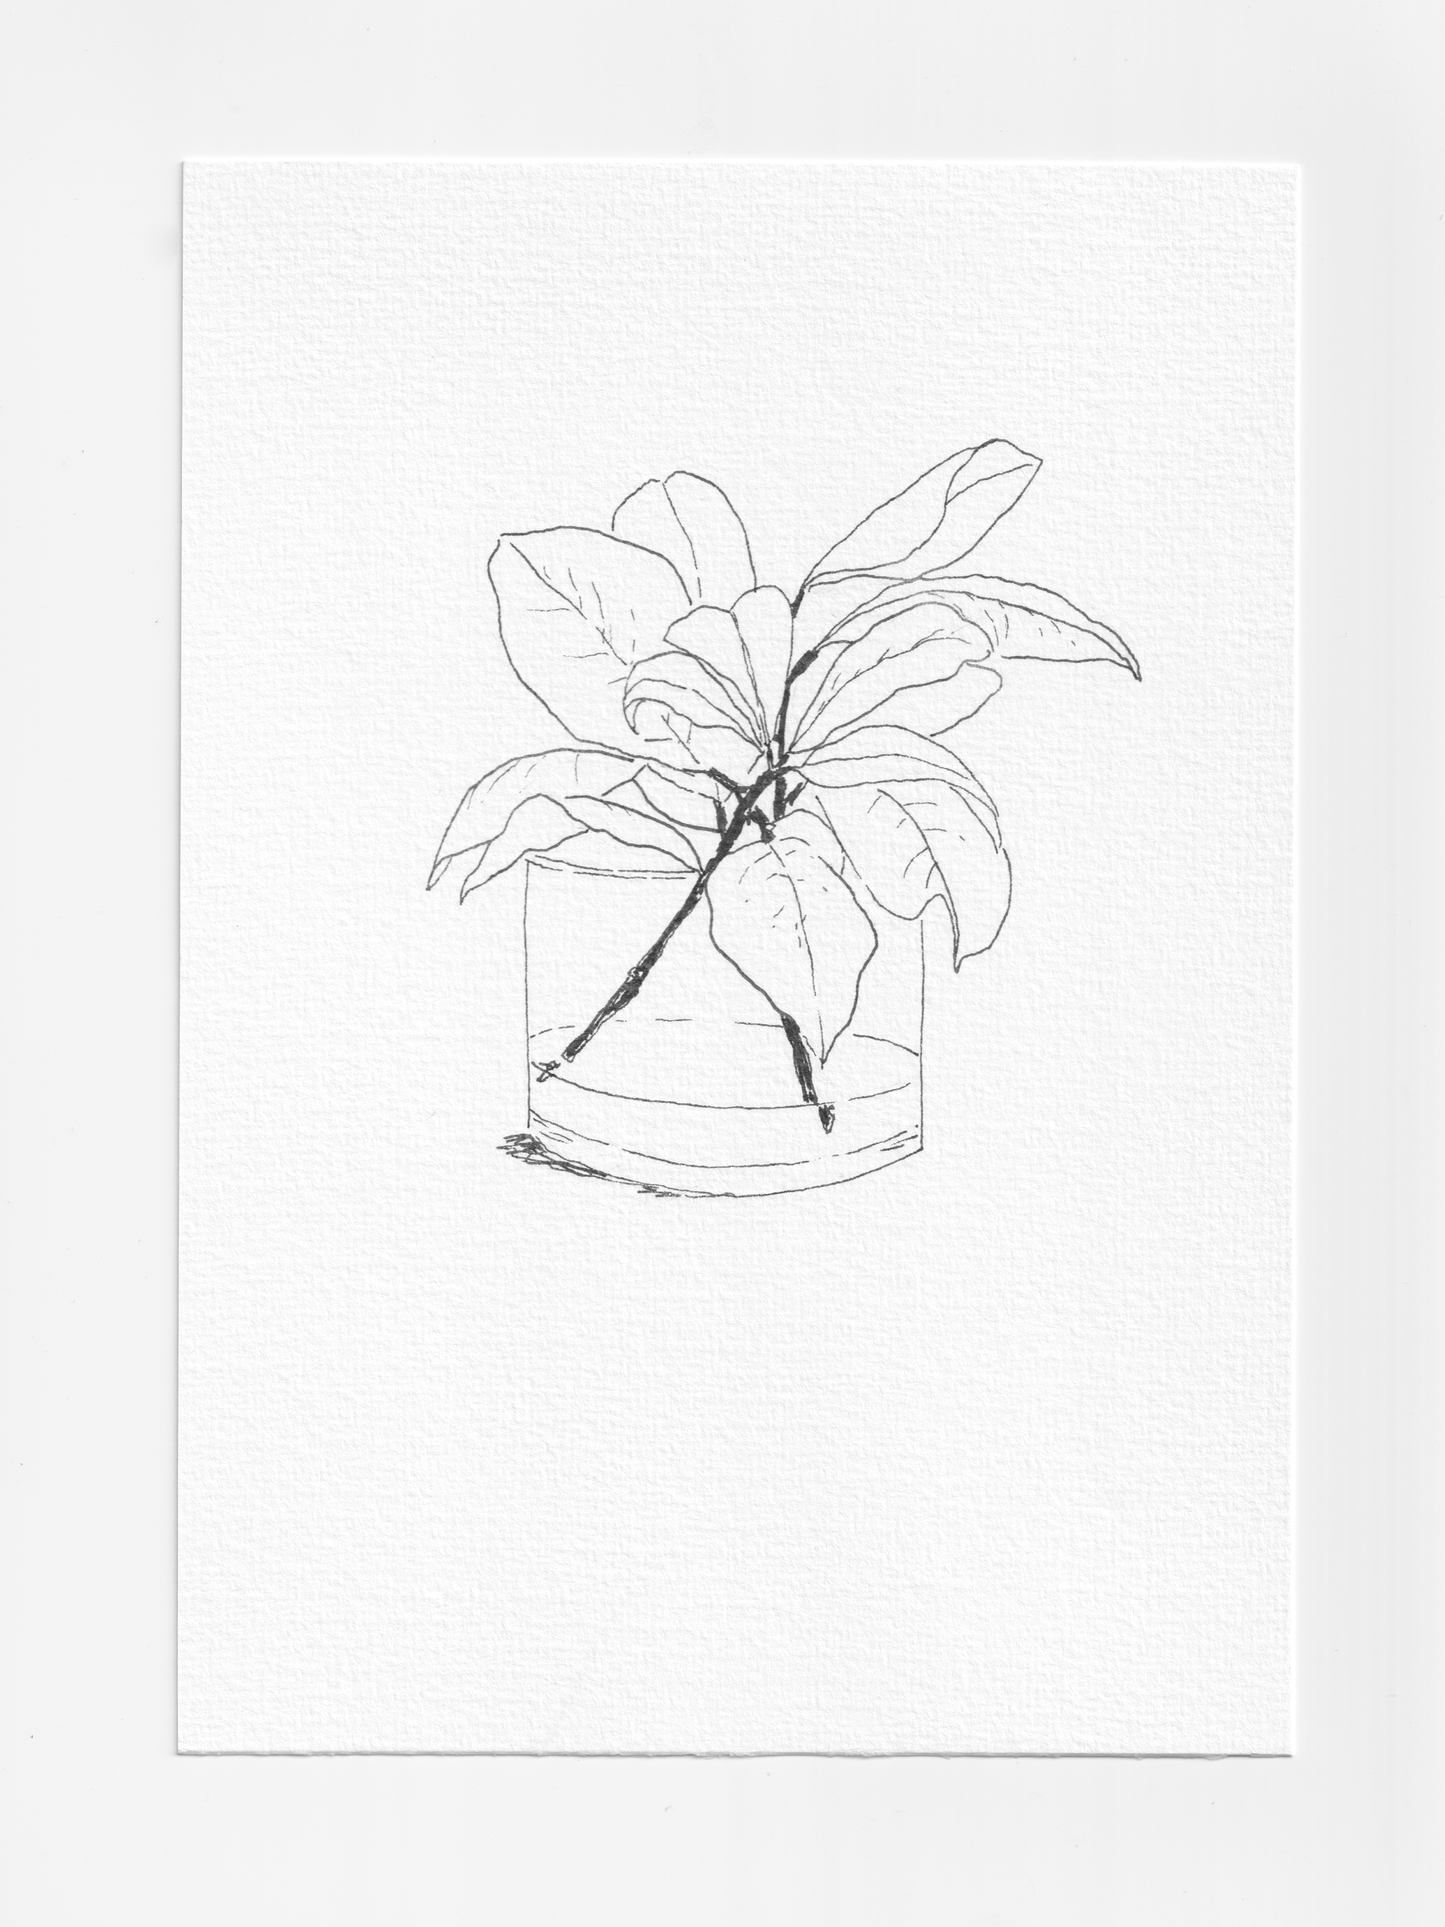 Daily Illustration - Day 26 - Magnolia leaf in vase